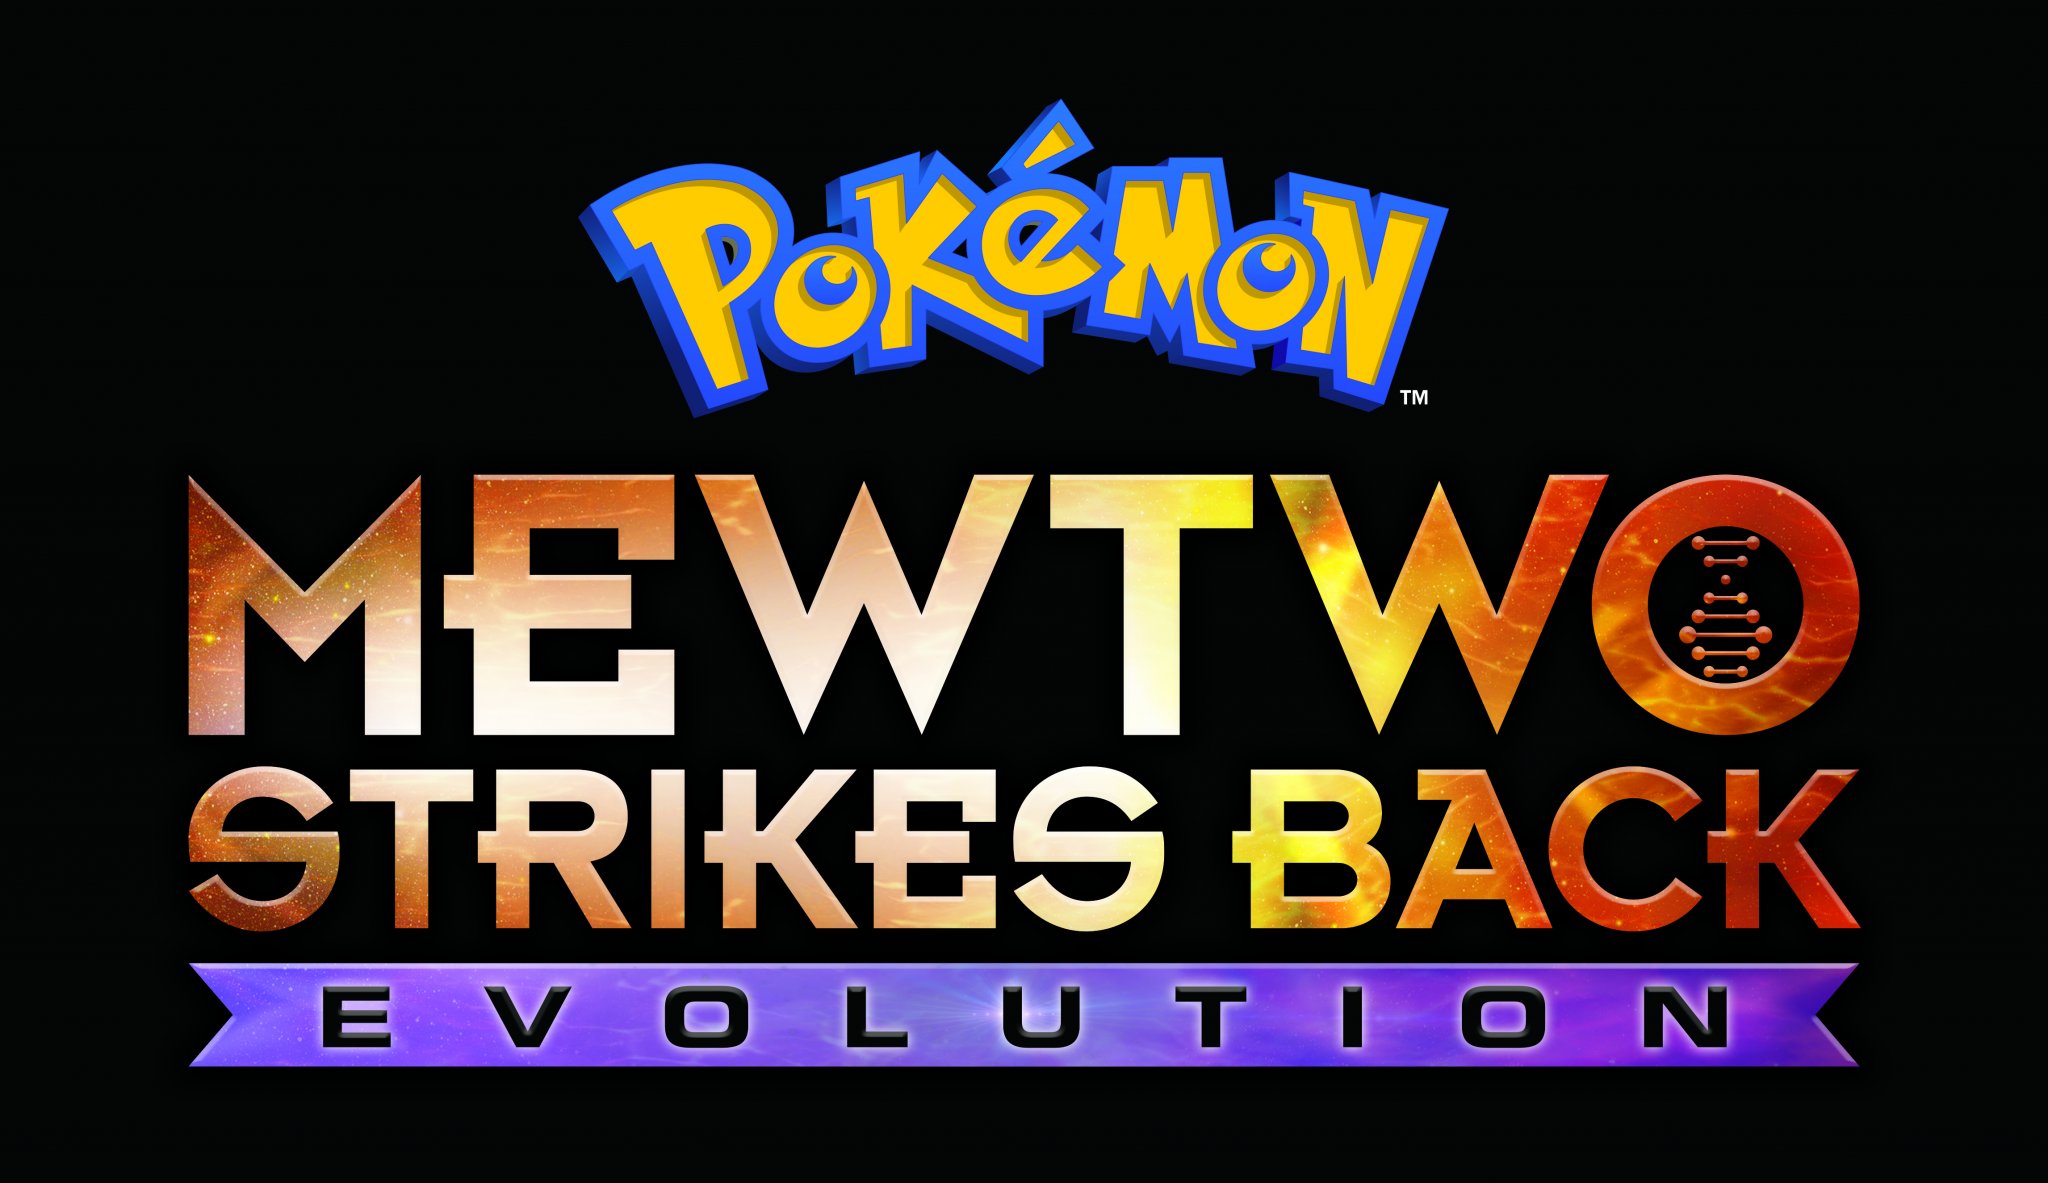 Pokémon the Movie: Mewtwo Strikes Back - Evolution streaming